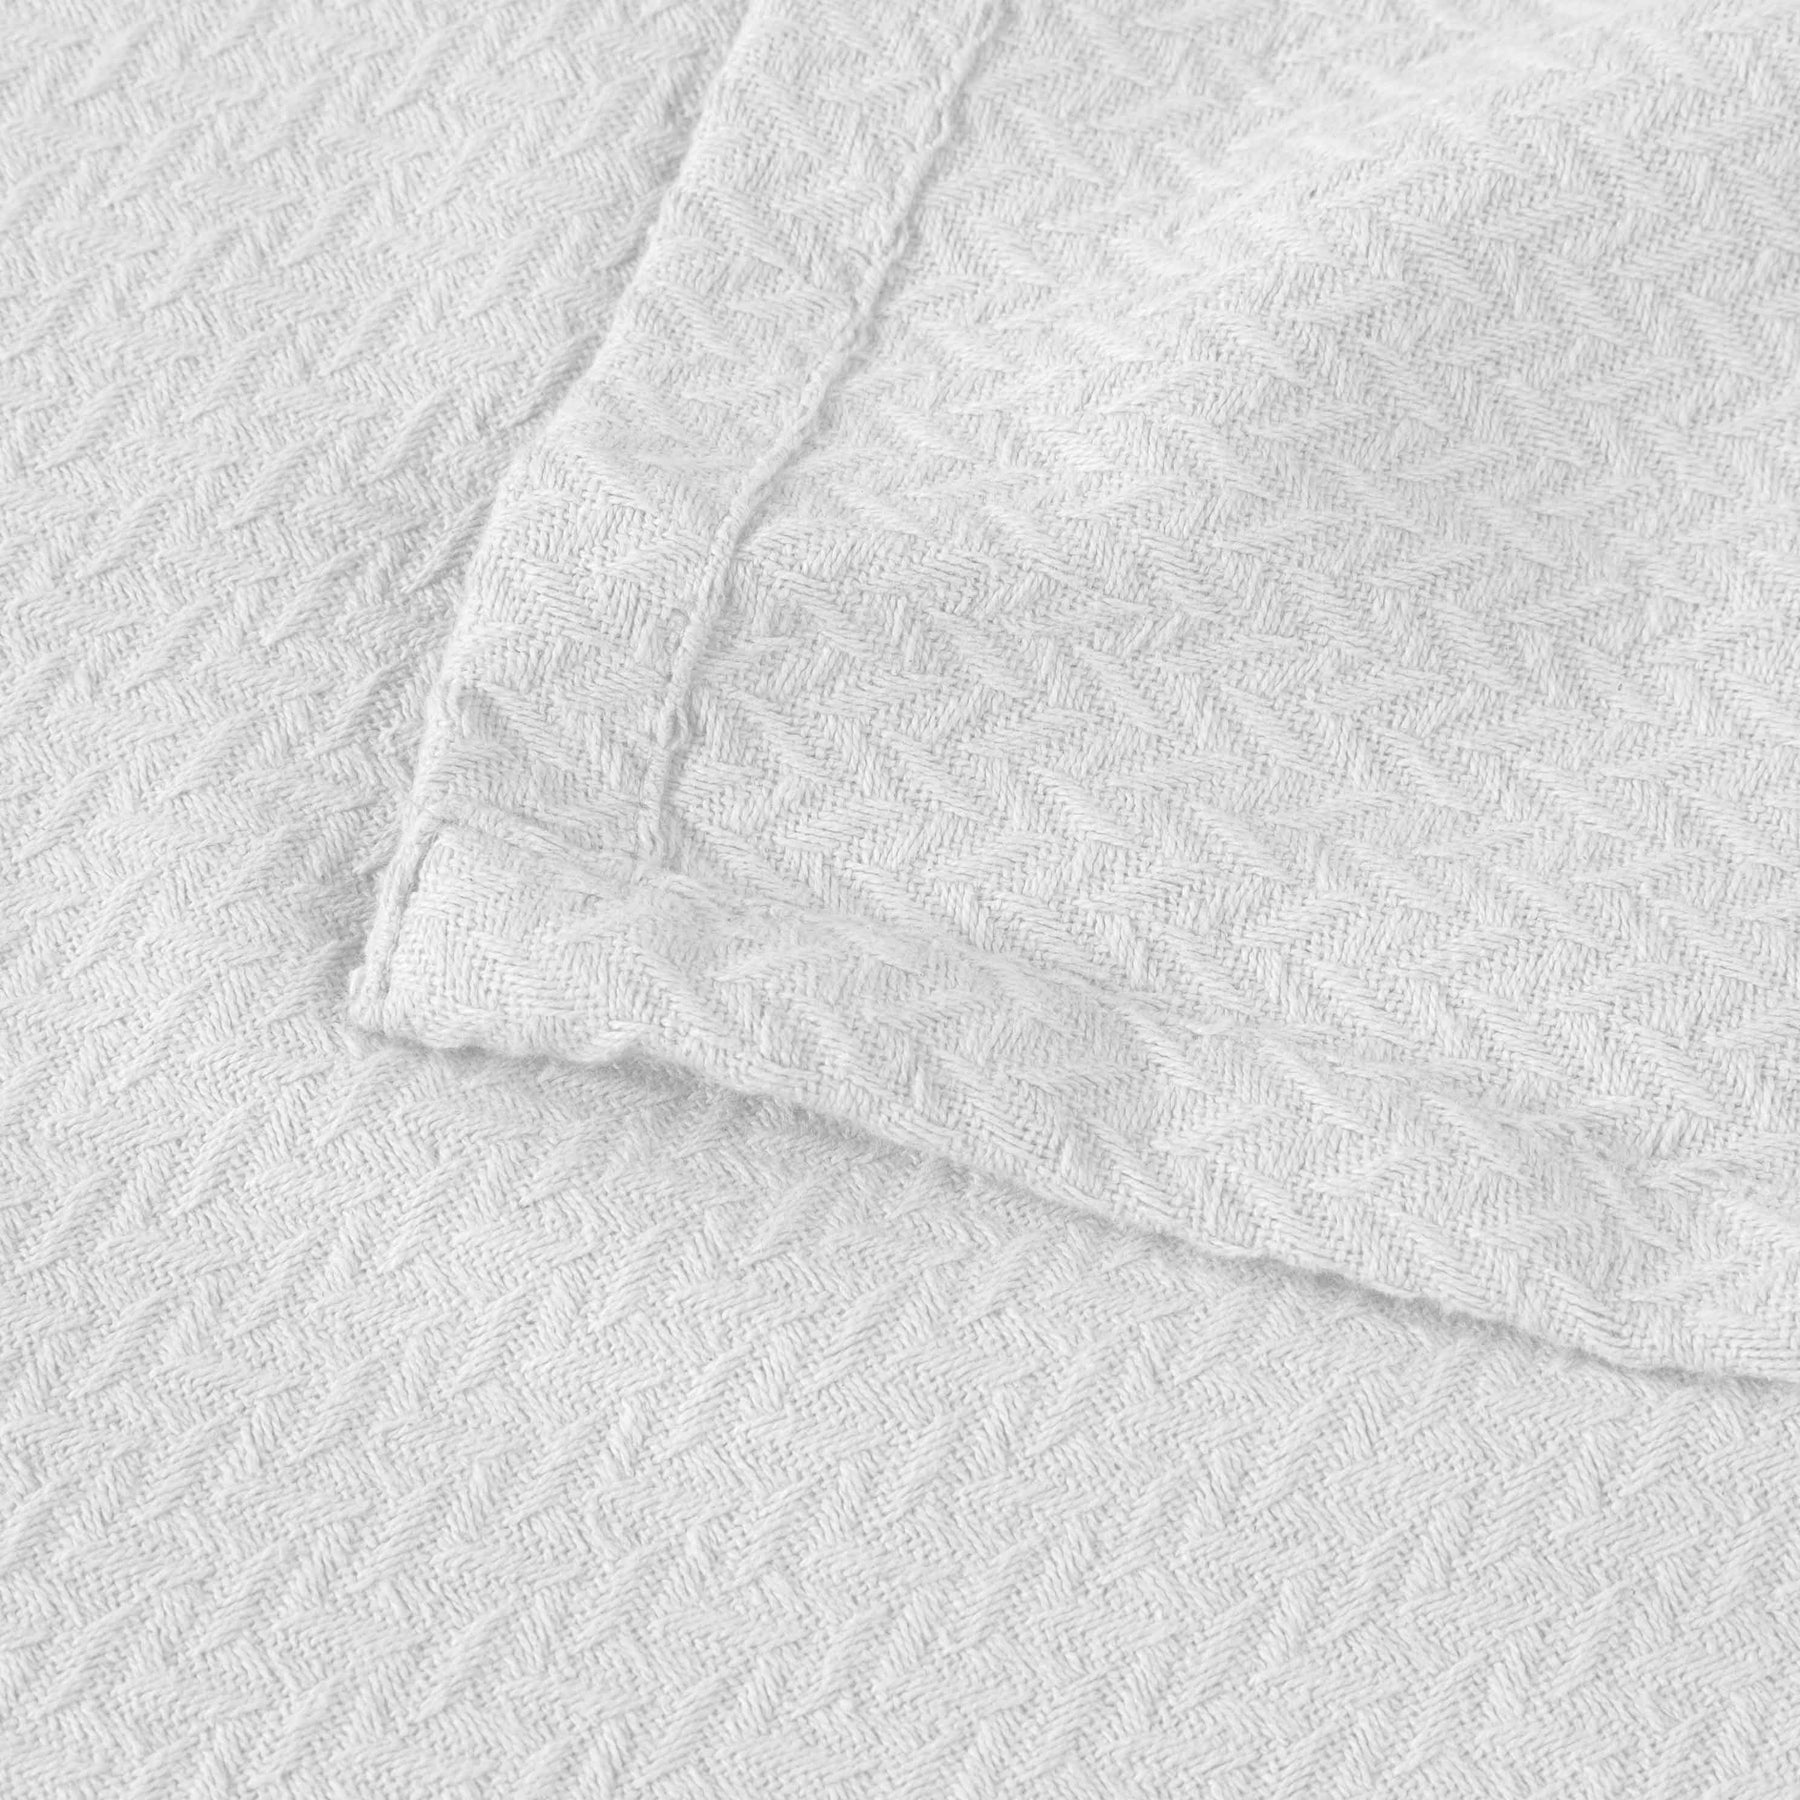 Nobel Cotton Textured Jacquard Chevron Lightweight Woven Blanket - White